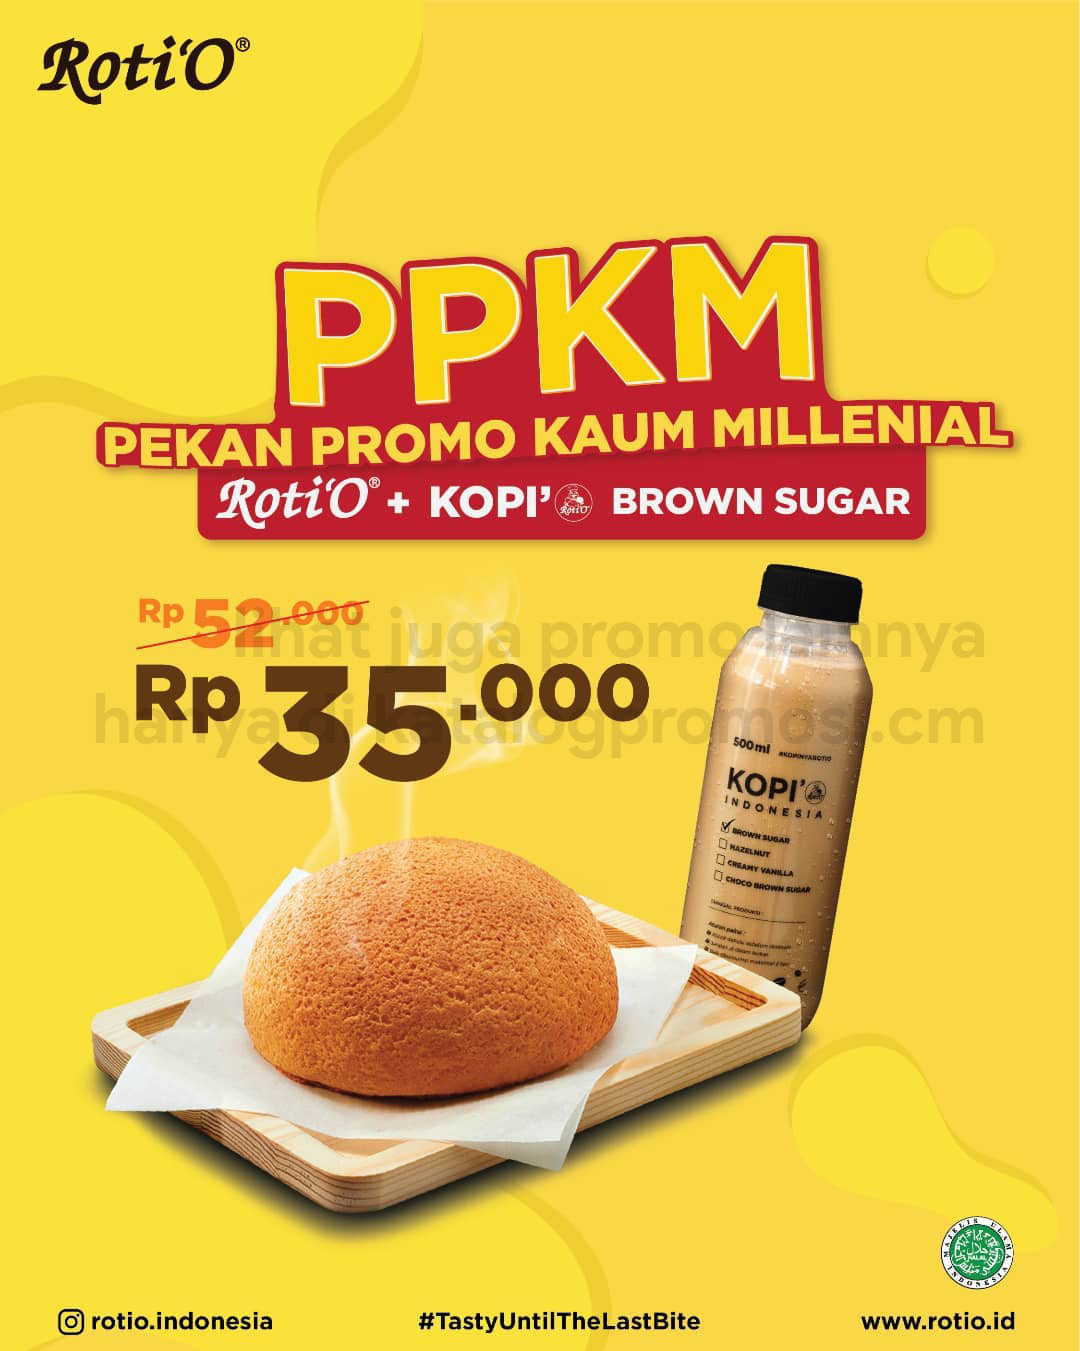 Promo ROTI'O PPKM/Pekan Promo Kaum Millenial  - Paket 1 Roti'O & 1 Kopi'O cuma Rp. 35.000